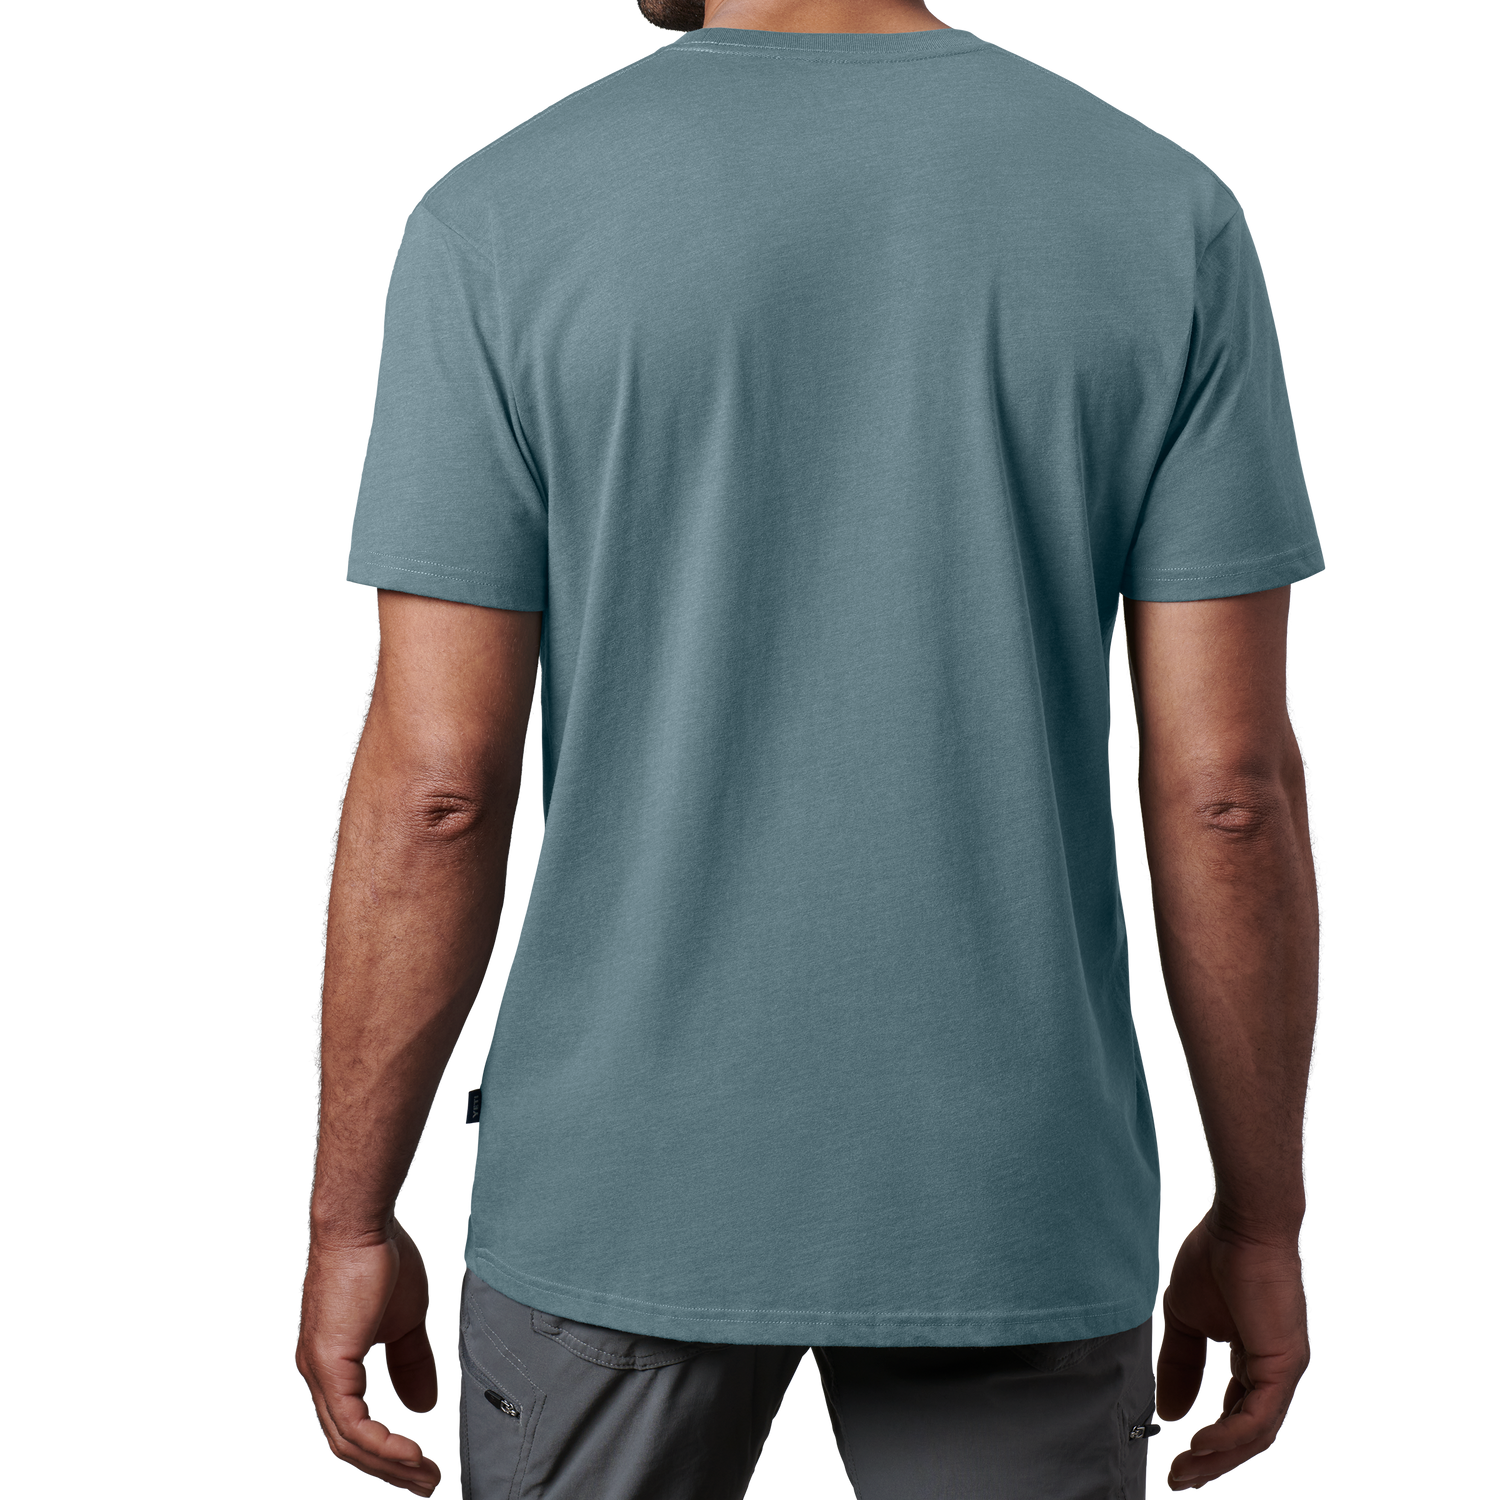 YETI Logo Badge Premium Short Sleeve T-Shirt Indigo